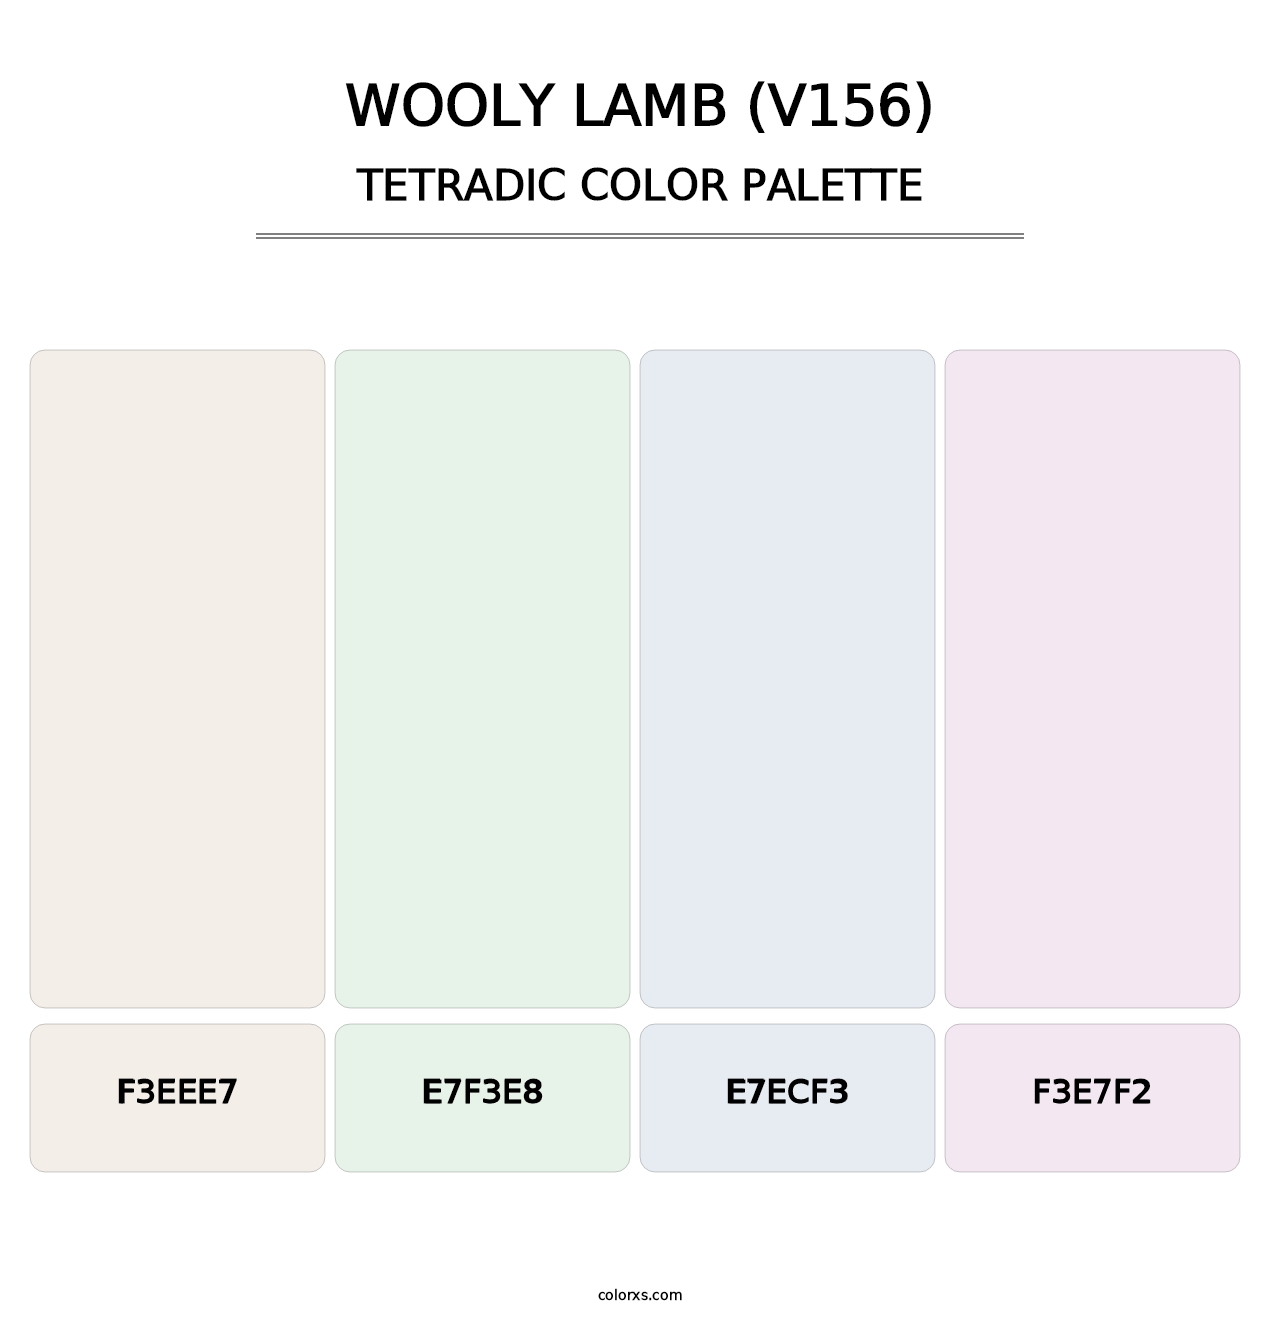 Wooly Lamb (V156) - Tetradic Color Palette